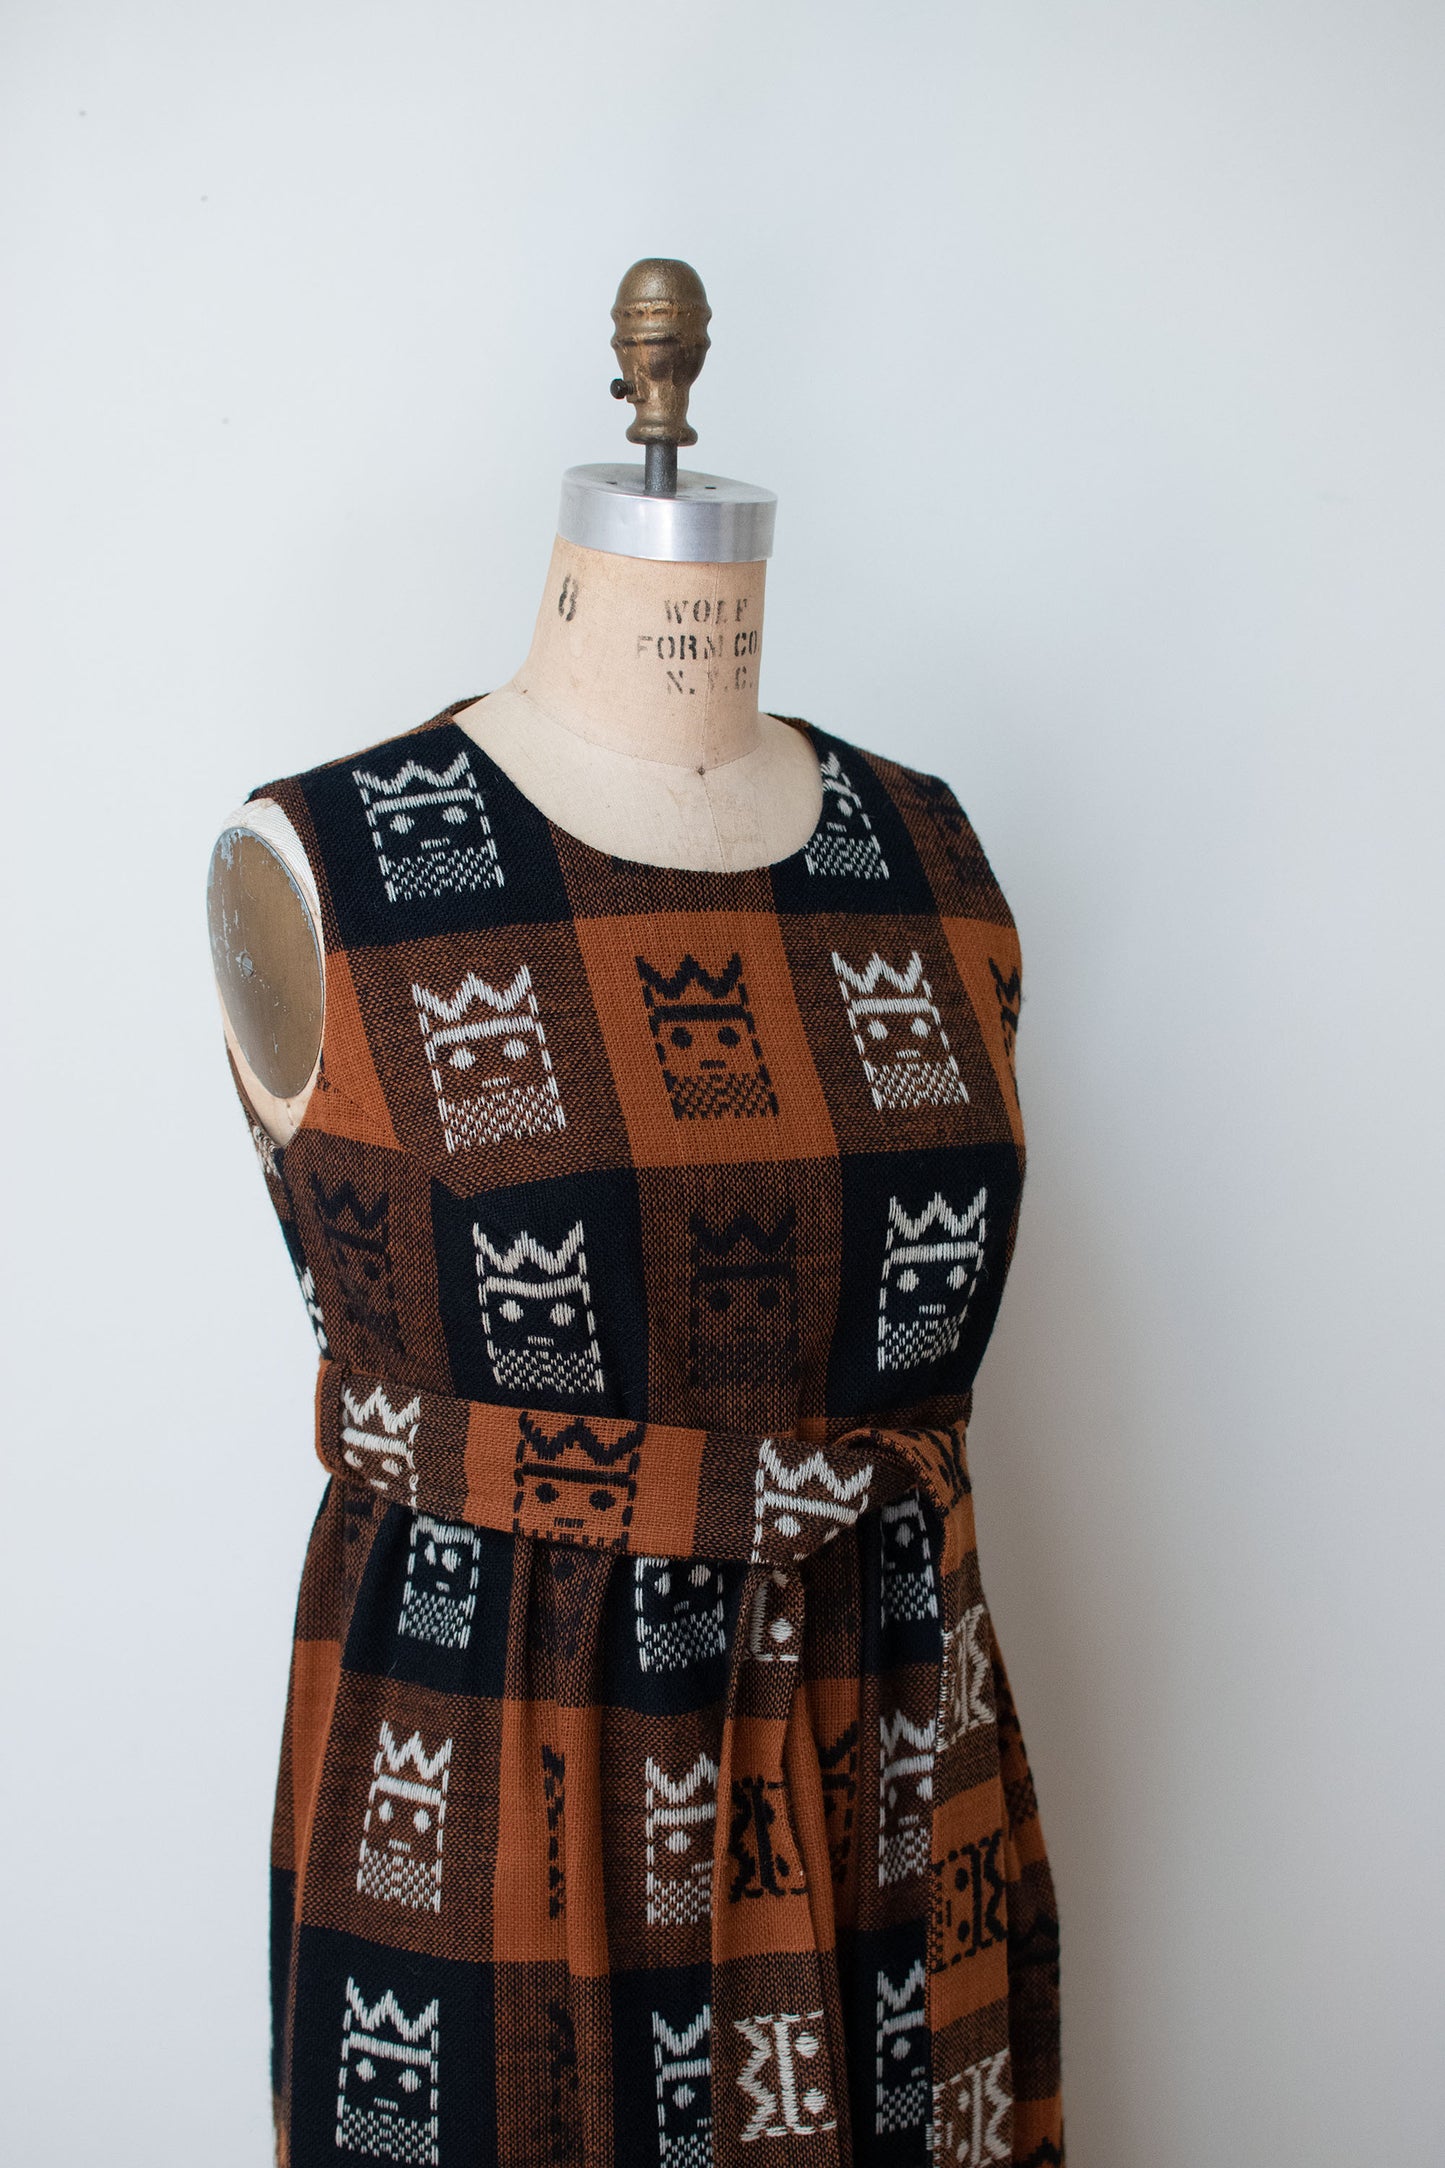 1970s checkmate Dress